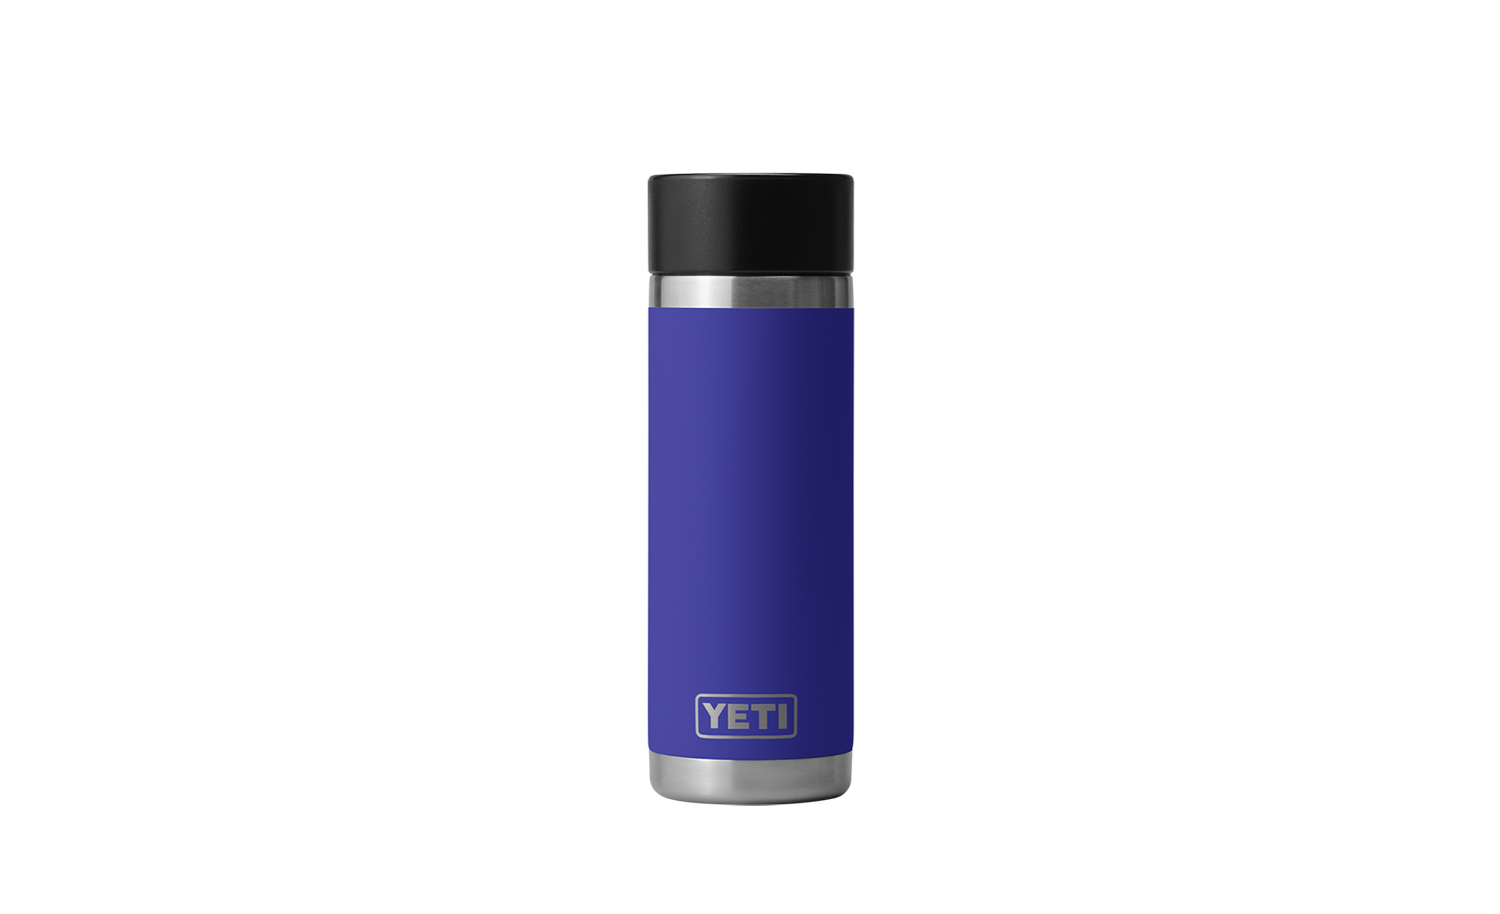 18oz TFT Logo Yeti Rambler Water Bottle - The Freshwater TrustThe